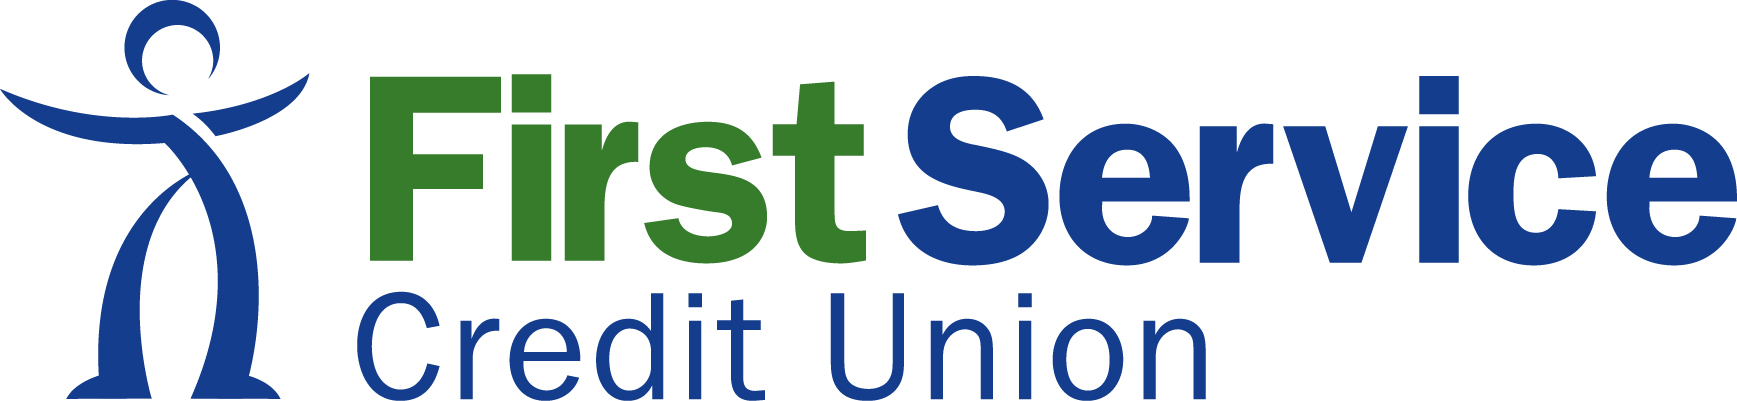 First Service Credit Union Company Logo